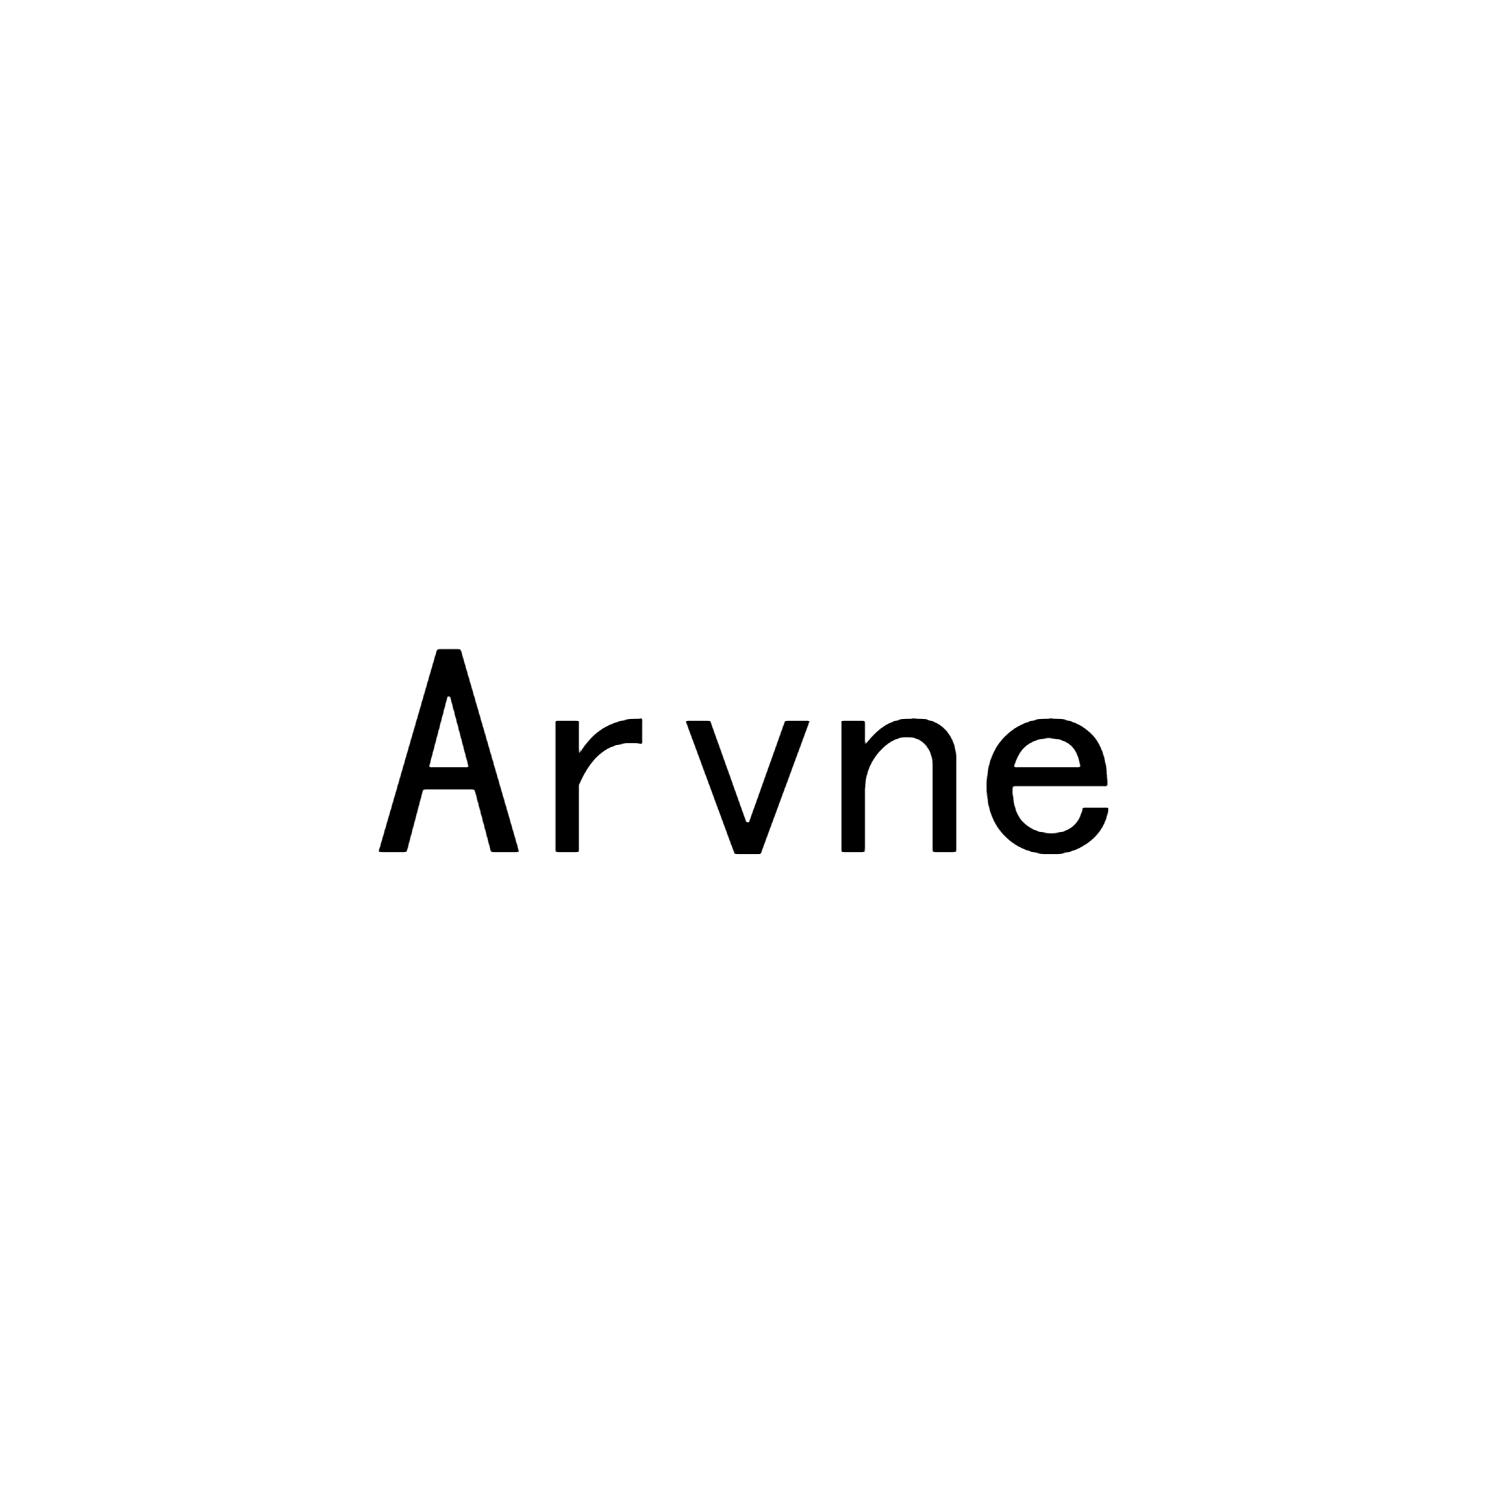 30类-面点饮品ARVNE商标转让